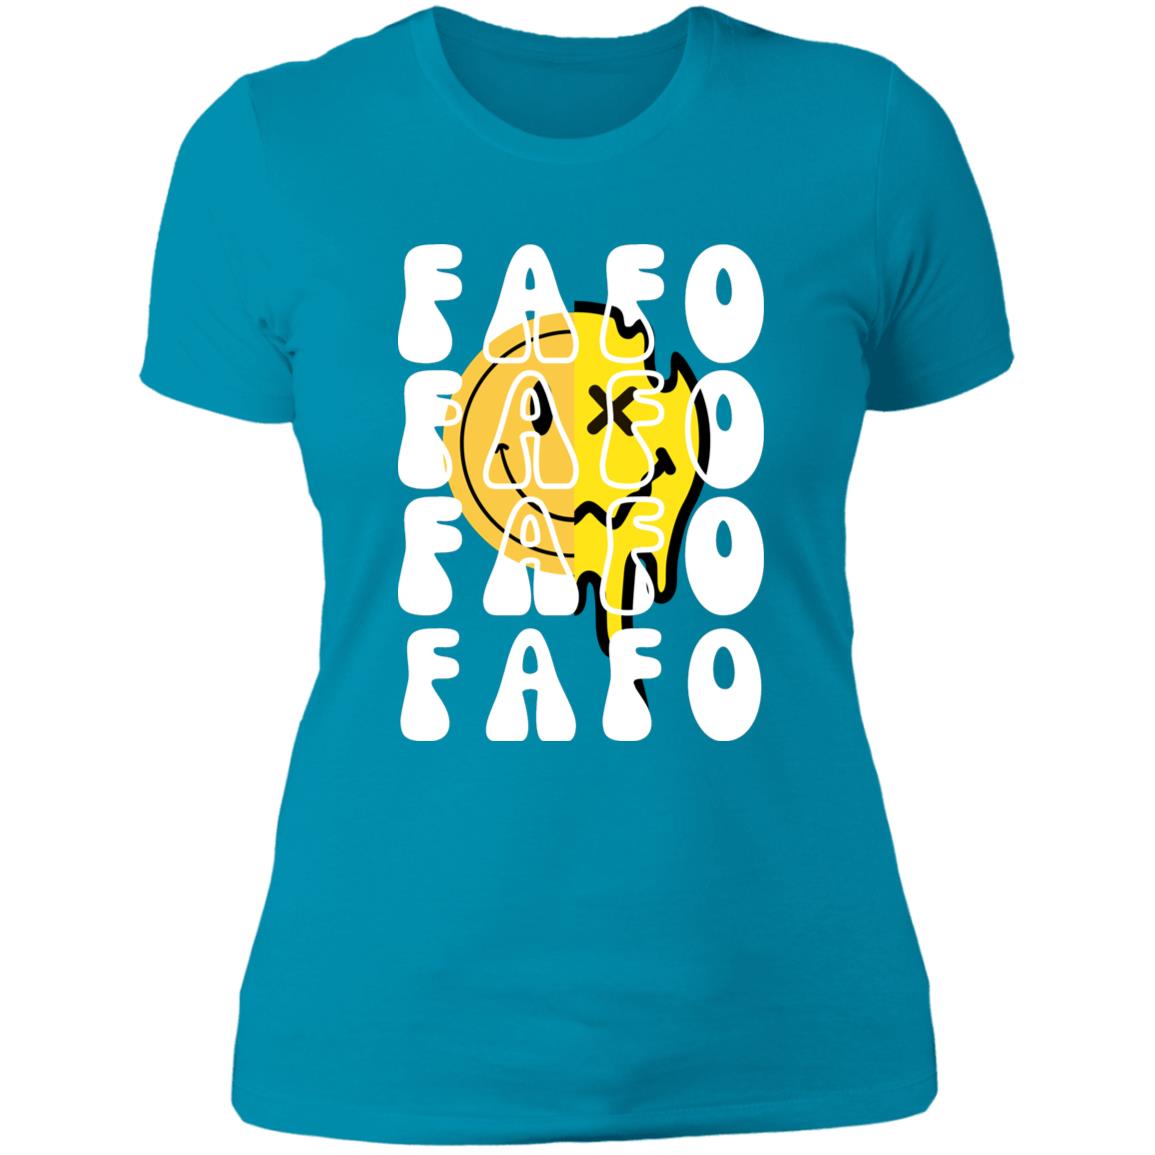 FAFO Retro Smile Ladies' Boyfriend T-Shirt - Expressive DeZien 